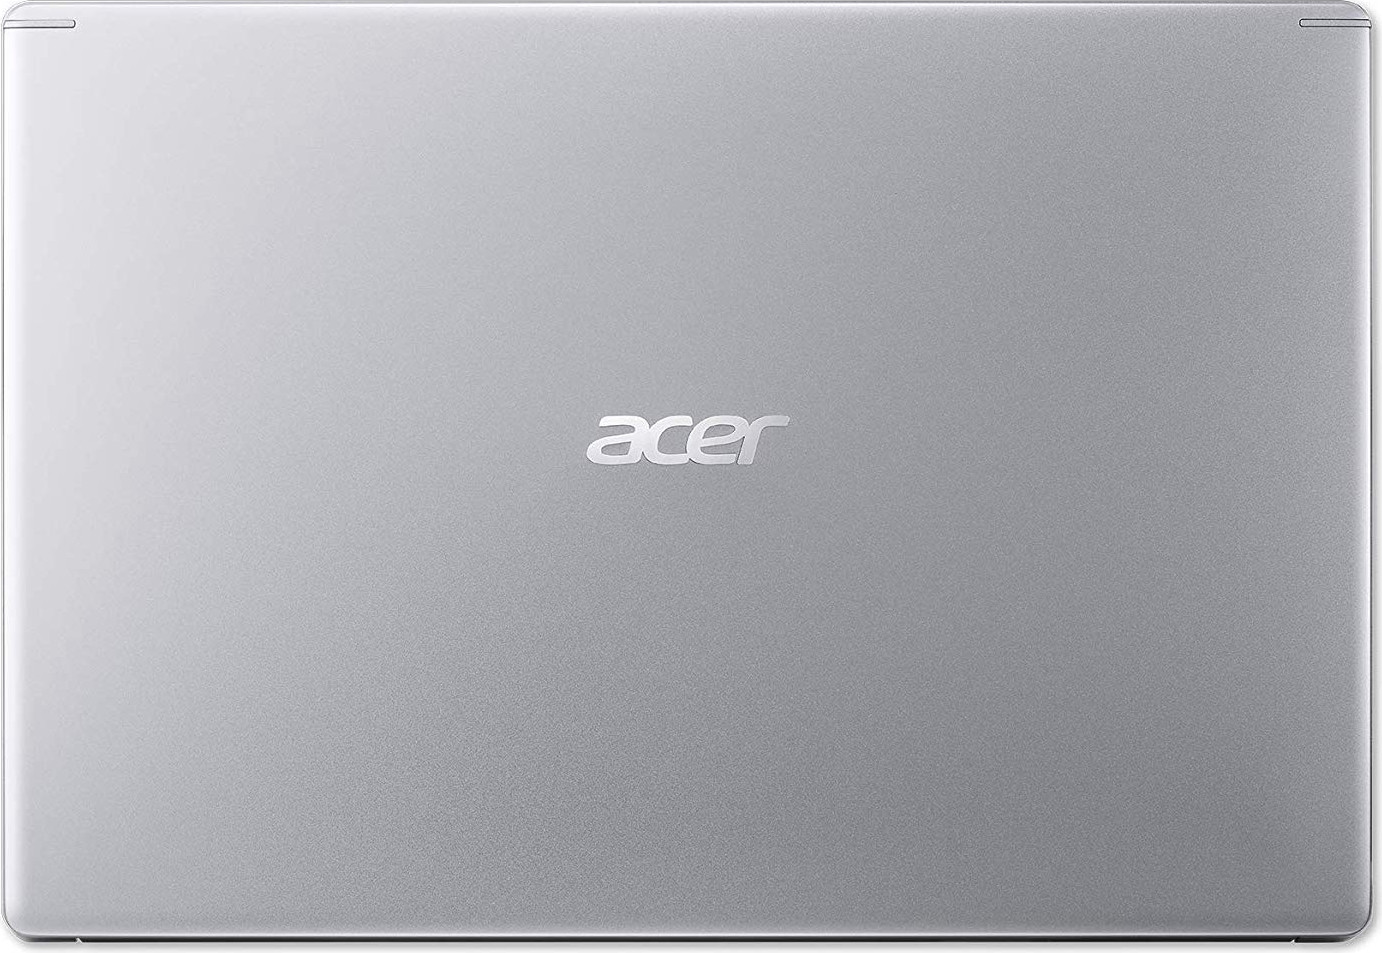 Acer Aspire 5 Slim Laptop, 15.6 Inches FHD IPS Display, 8th Gen Intel Core i5-8265U, 8GB DDR4, 256GB SSD, Fingerprint Reader, Windows 10 Home, A515-54-51DJ